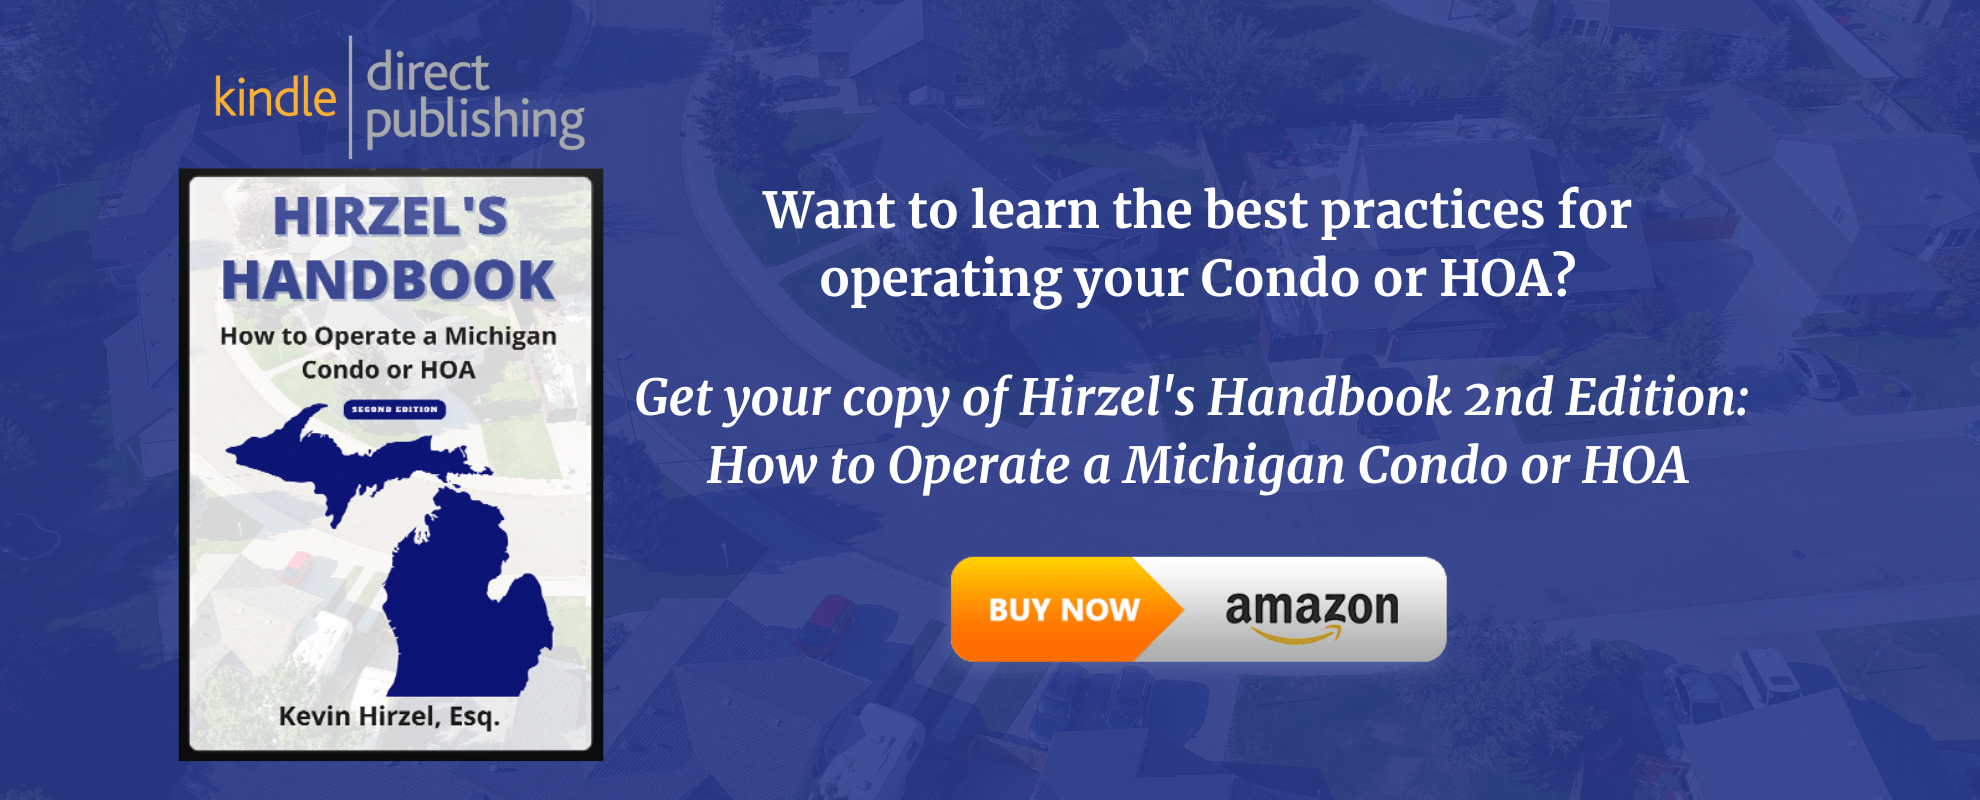 Hirzel's Handbook: How To Operate A Michigan Condo or HOA